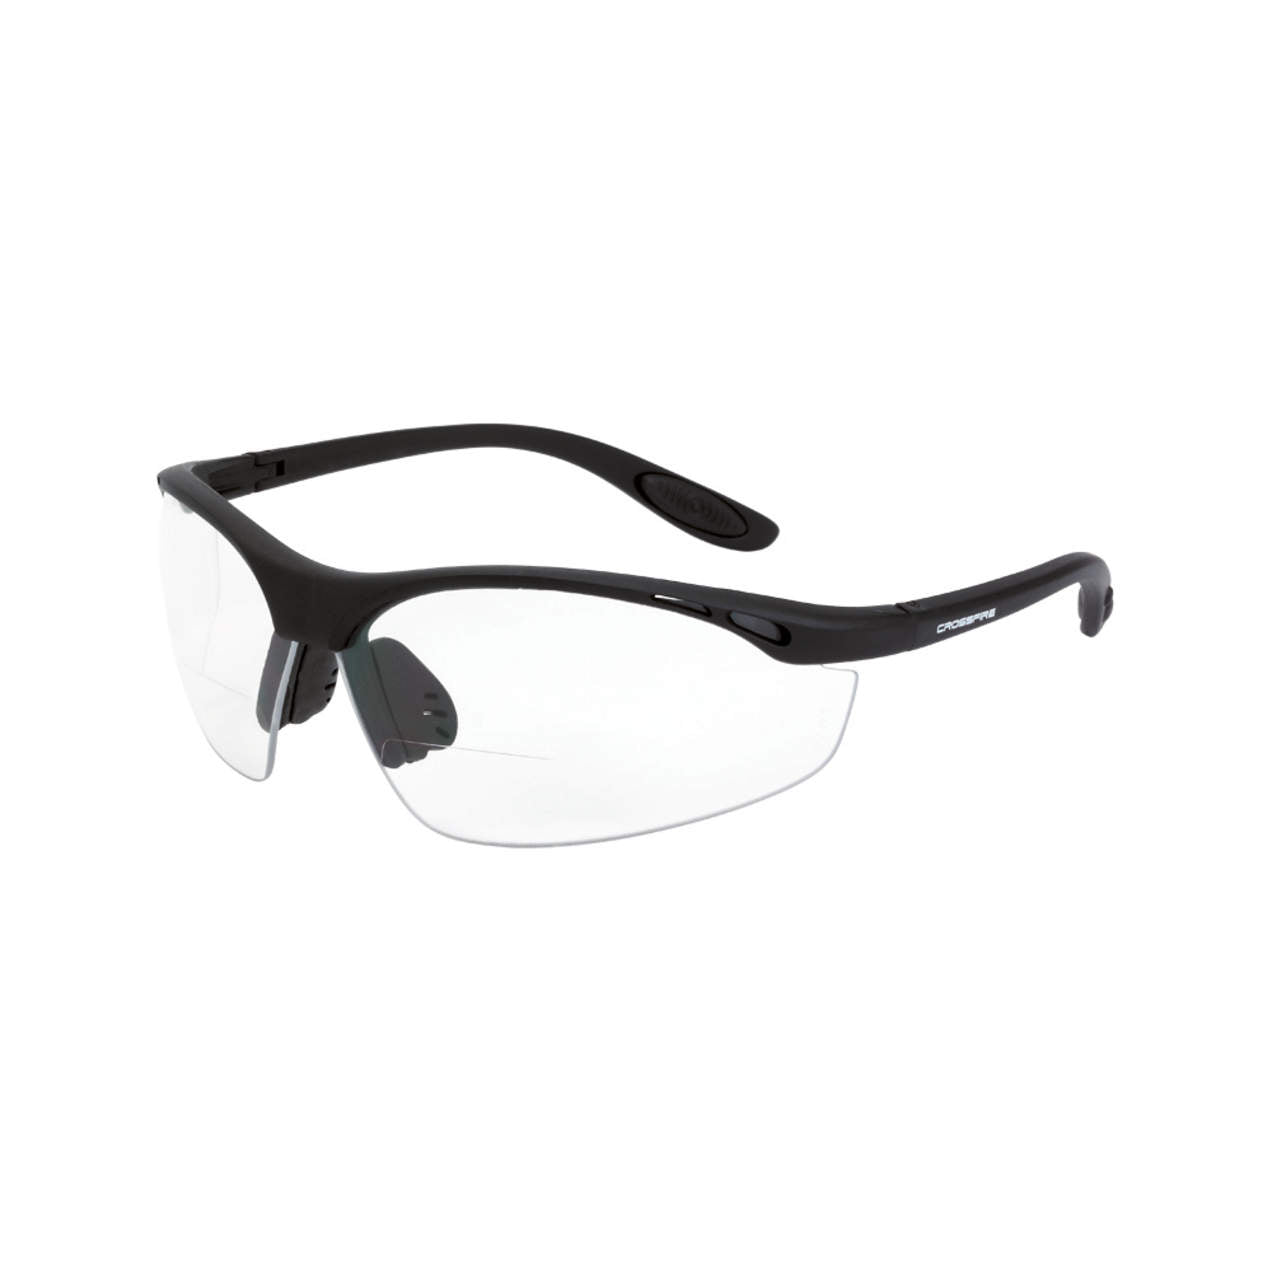 Talon Bifocal Safety Eyewear - Matte Black Frame - Clear Lens - 2.0 Diopter